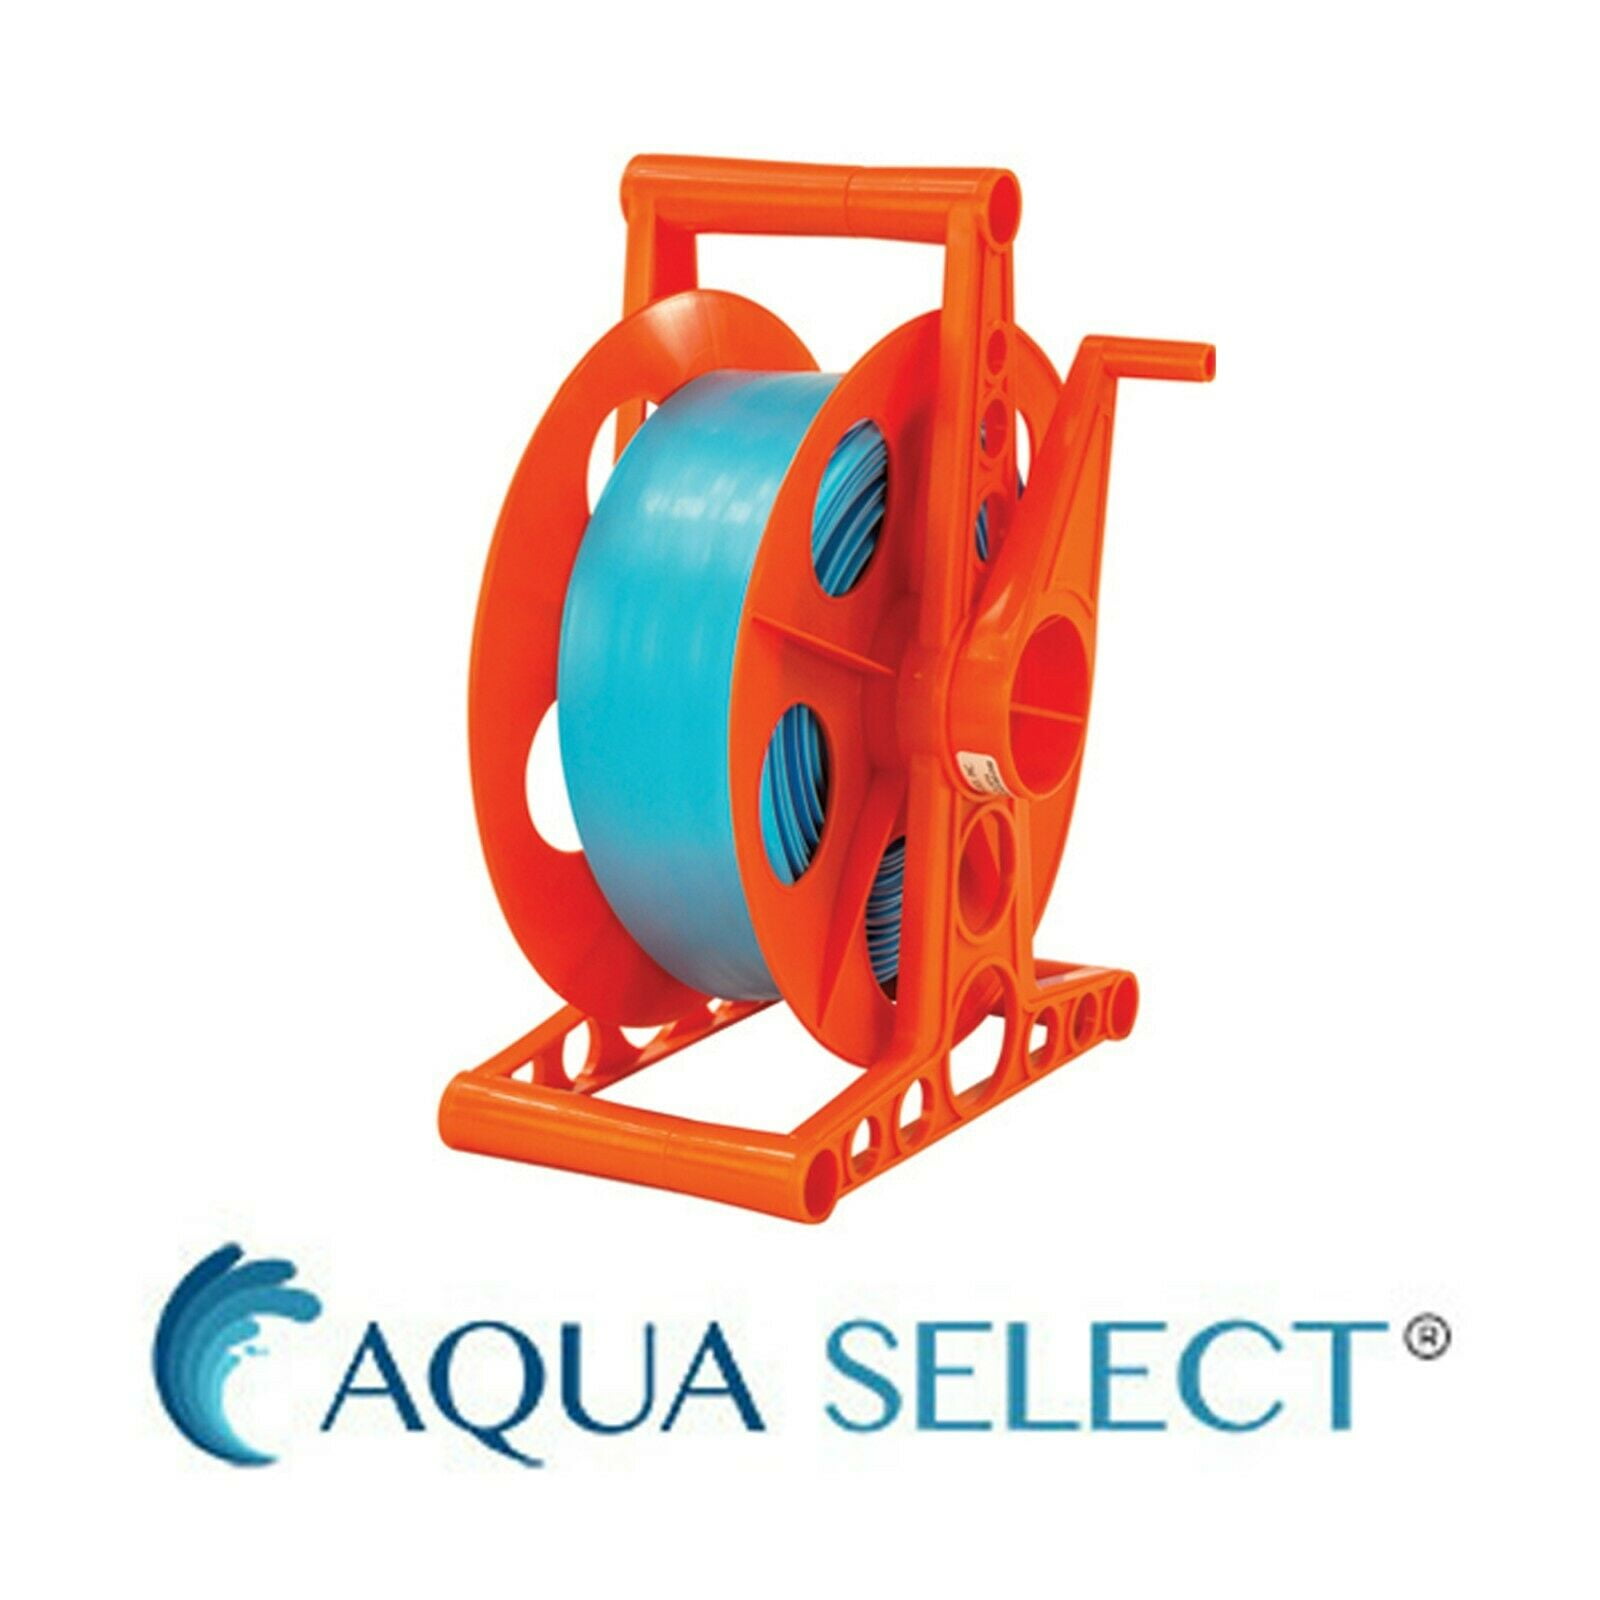 Details about   Aqua Select Swimming Pool Backwash Hose Reel & Includes 100' Hose 